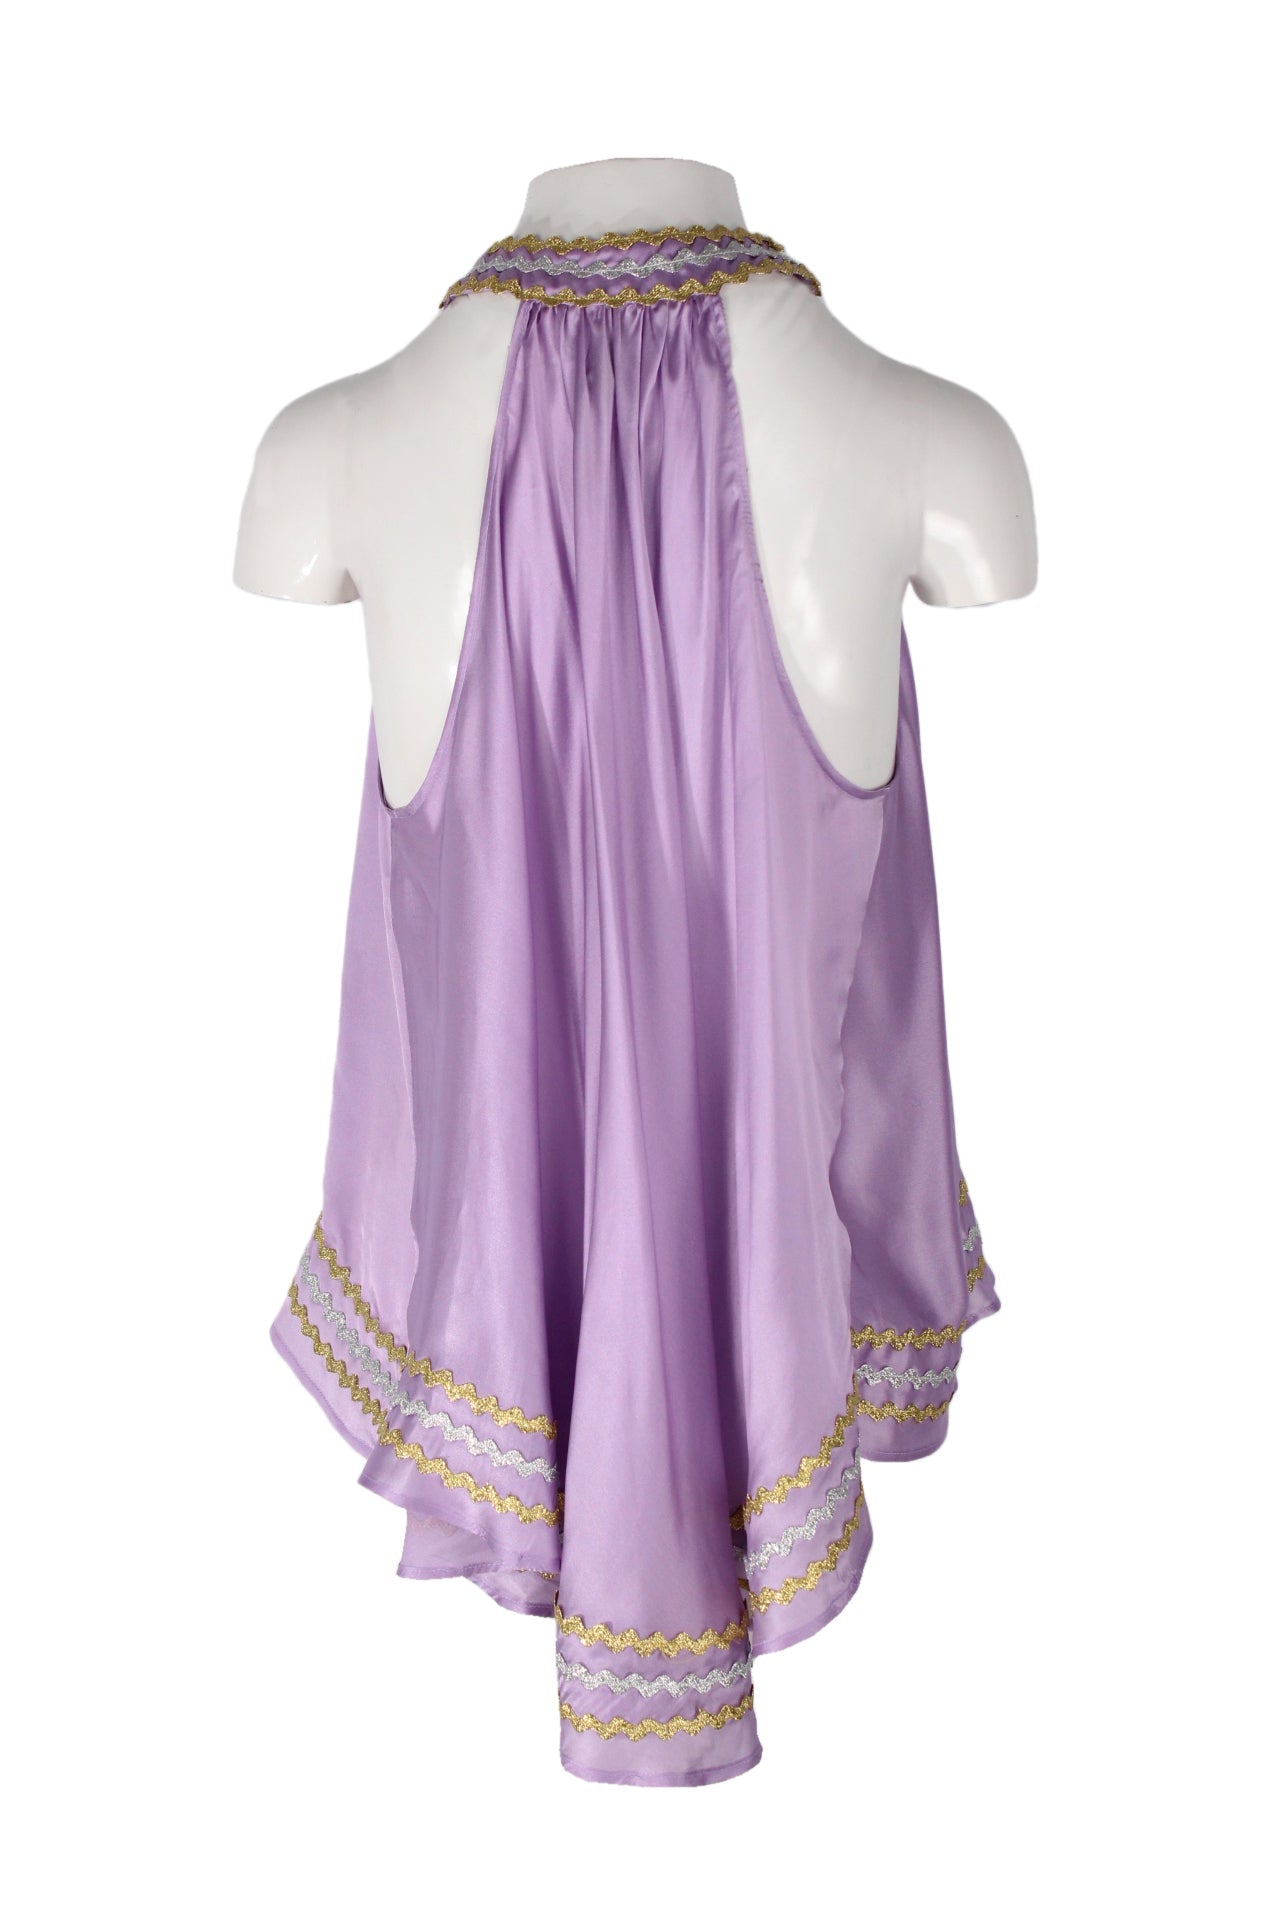 back angle julian macdonald lavender sleeveless silk blend top on feminine mannequin torso featuring gathered upper back. 